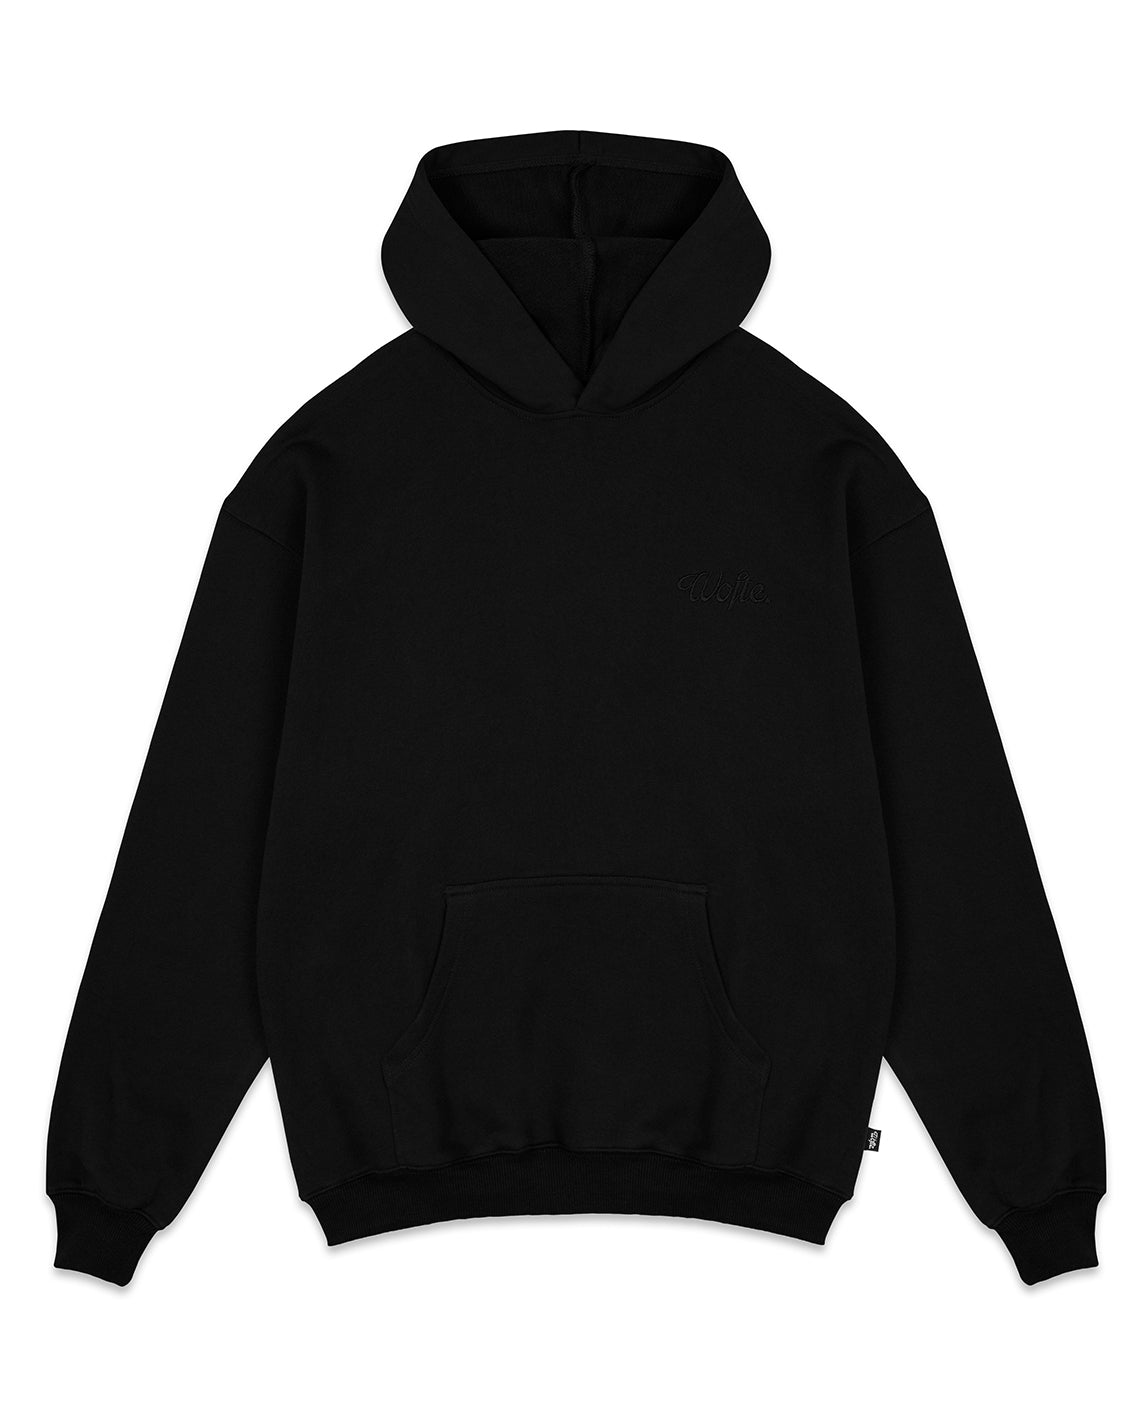 staple black oversized hoodie